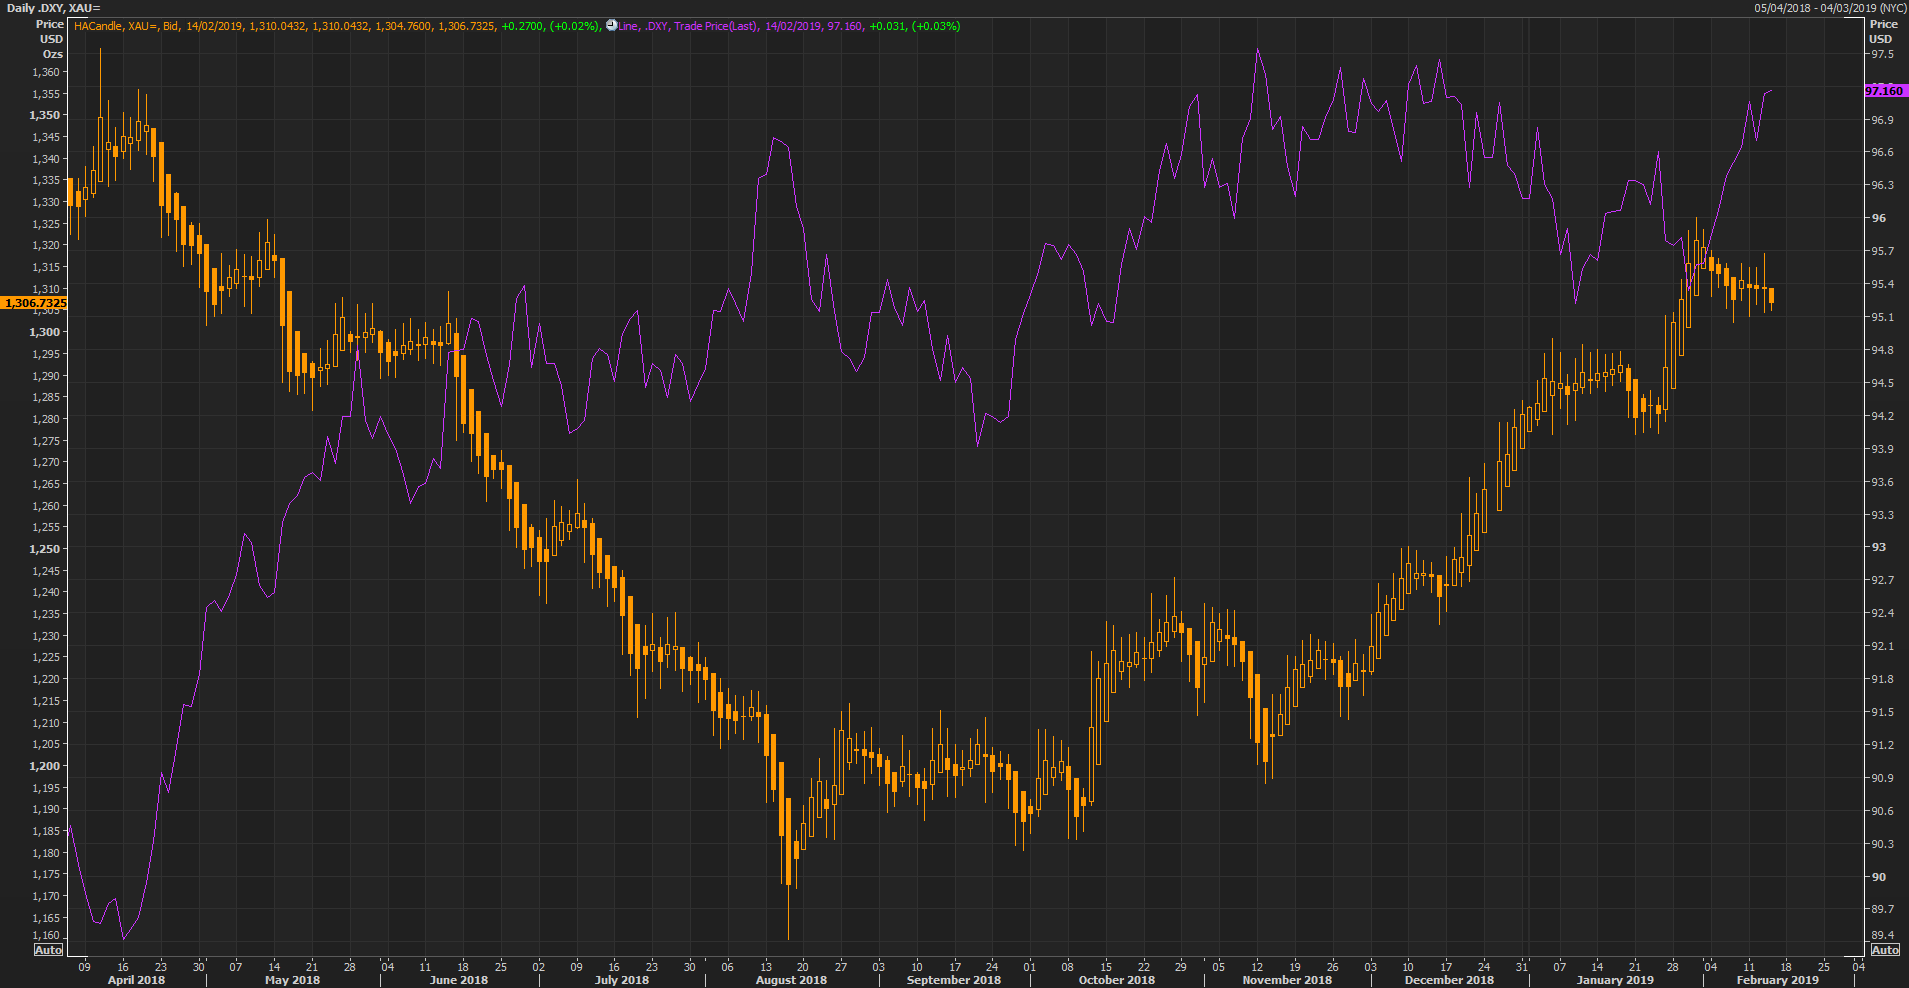 Gold (Orange) Vs USD (Purple) Daily Chart